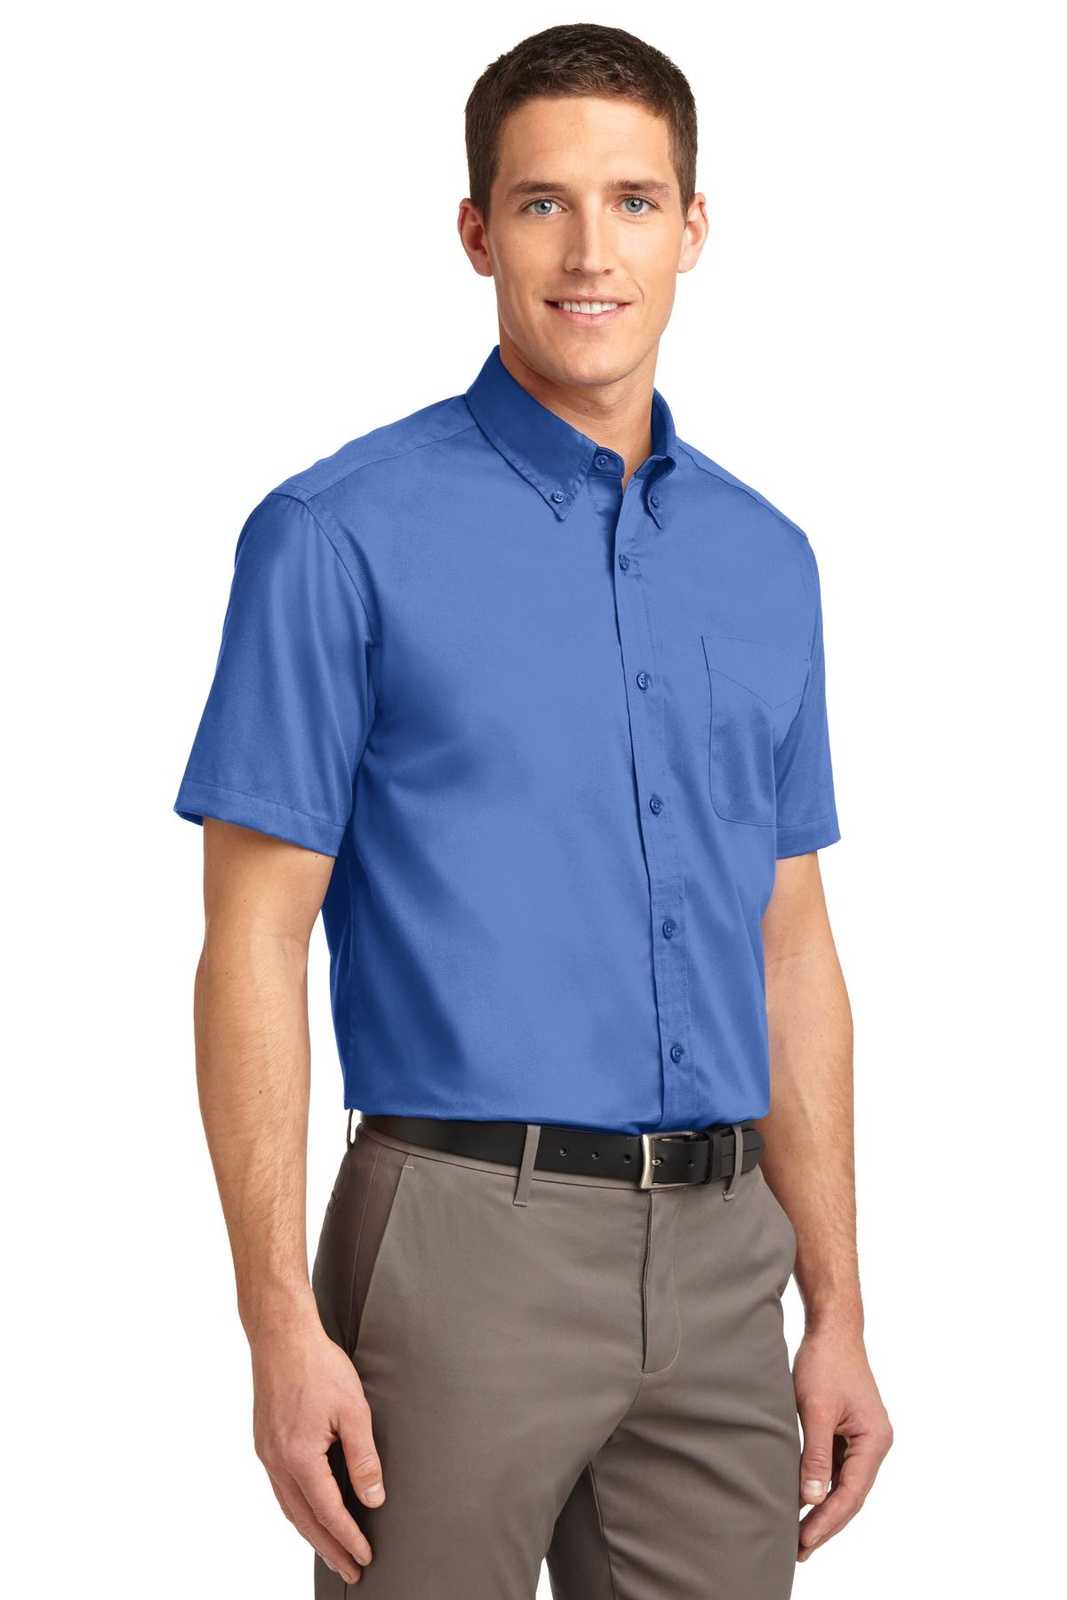 Port Authority S508 Short Sleeve Easy Care Shirt - Ultramarine Blue - HIT a Double - 4